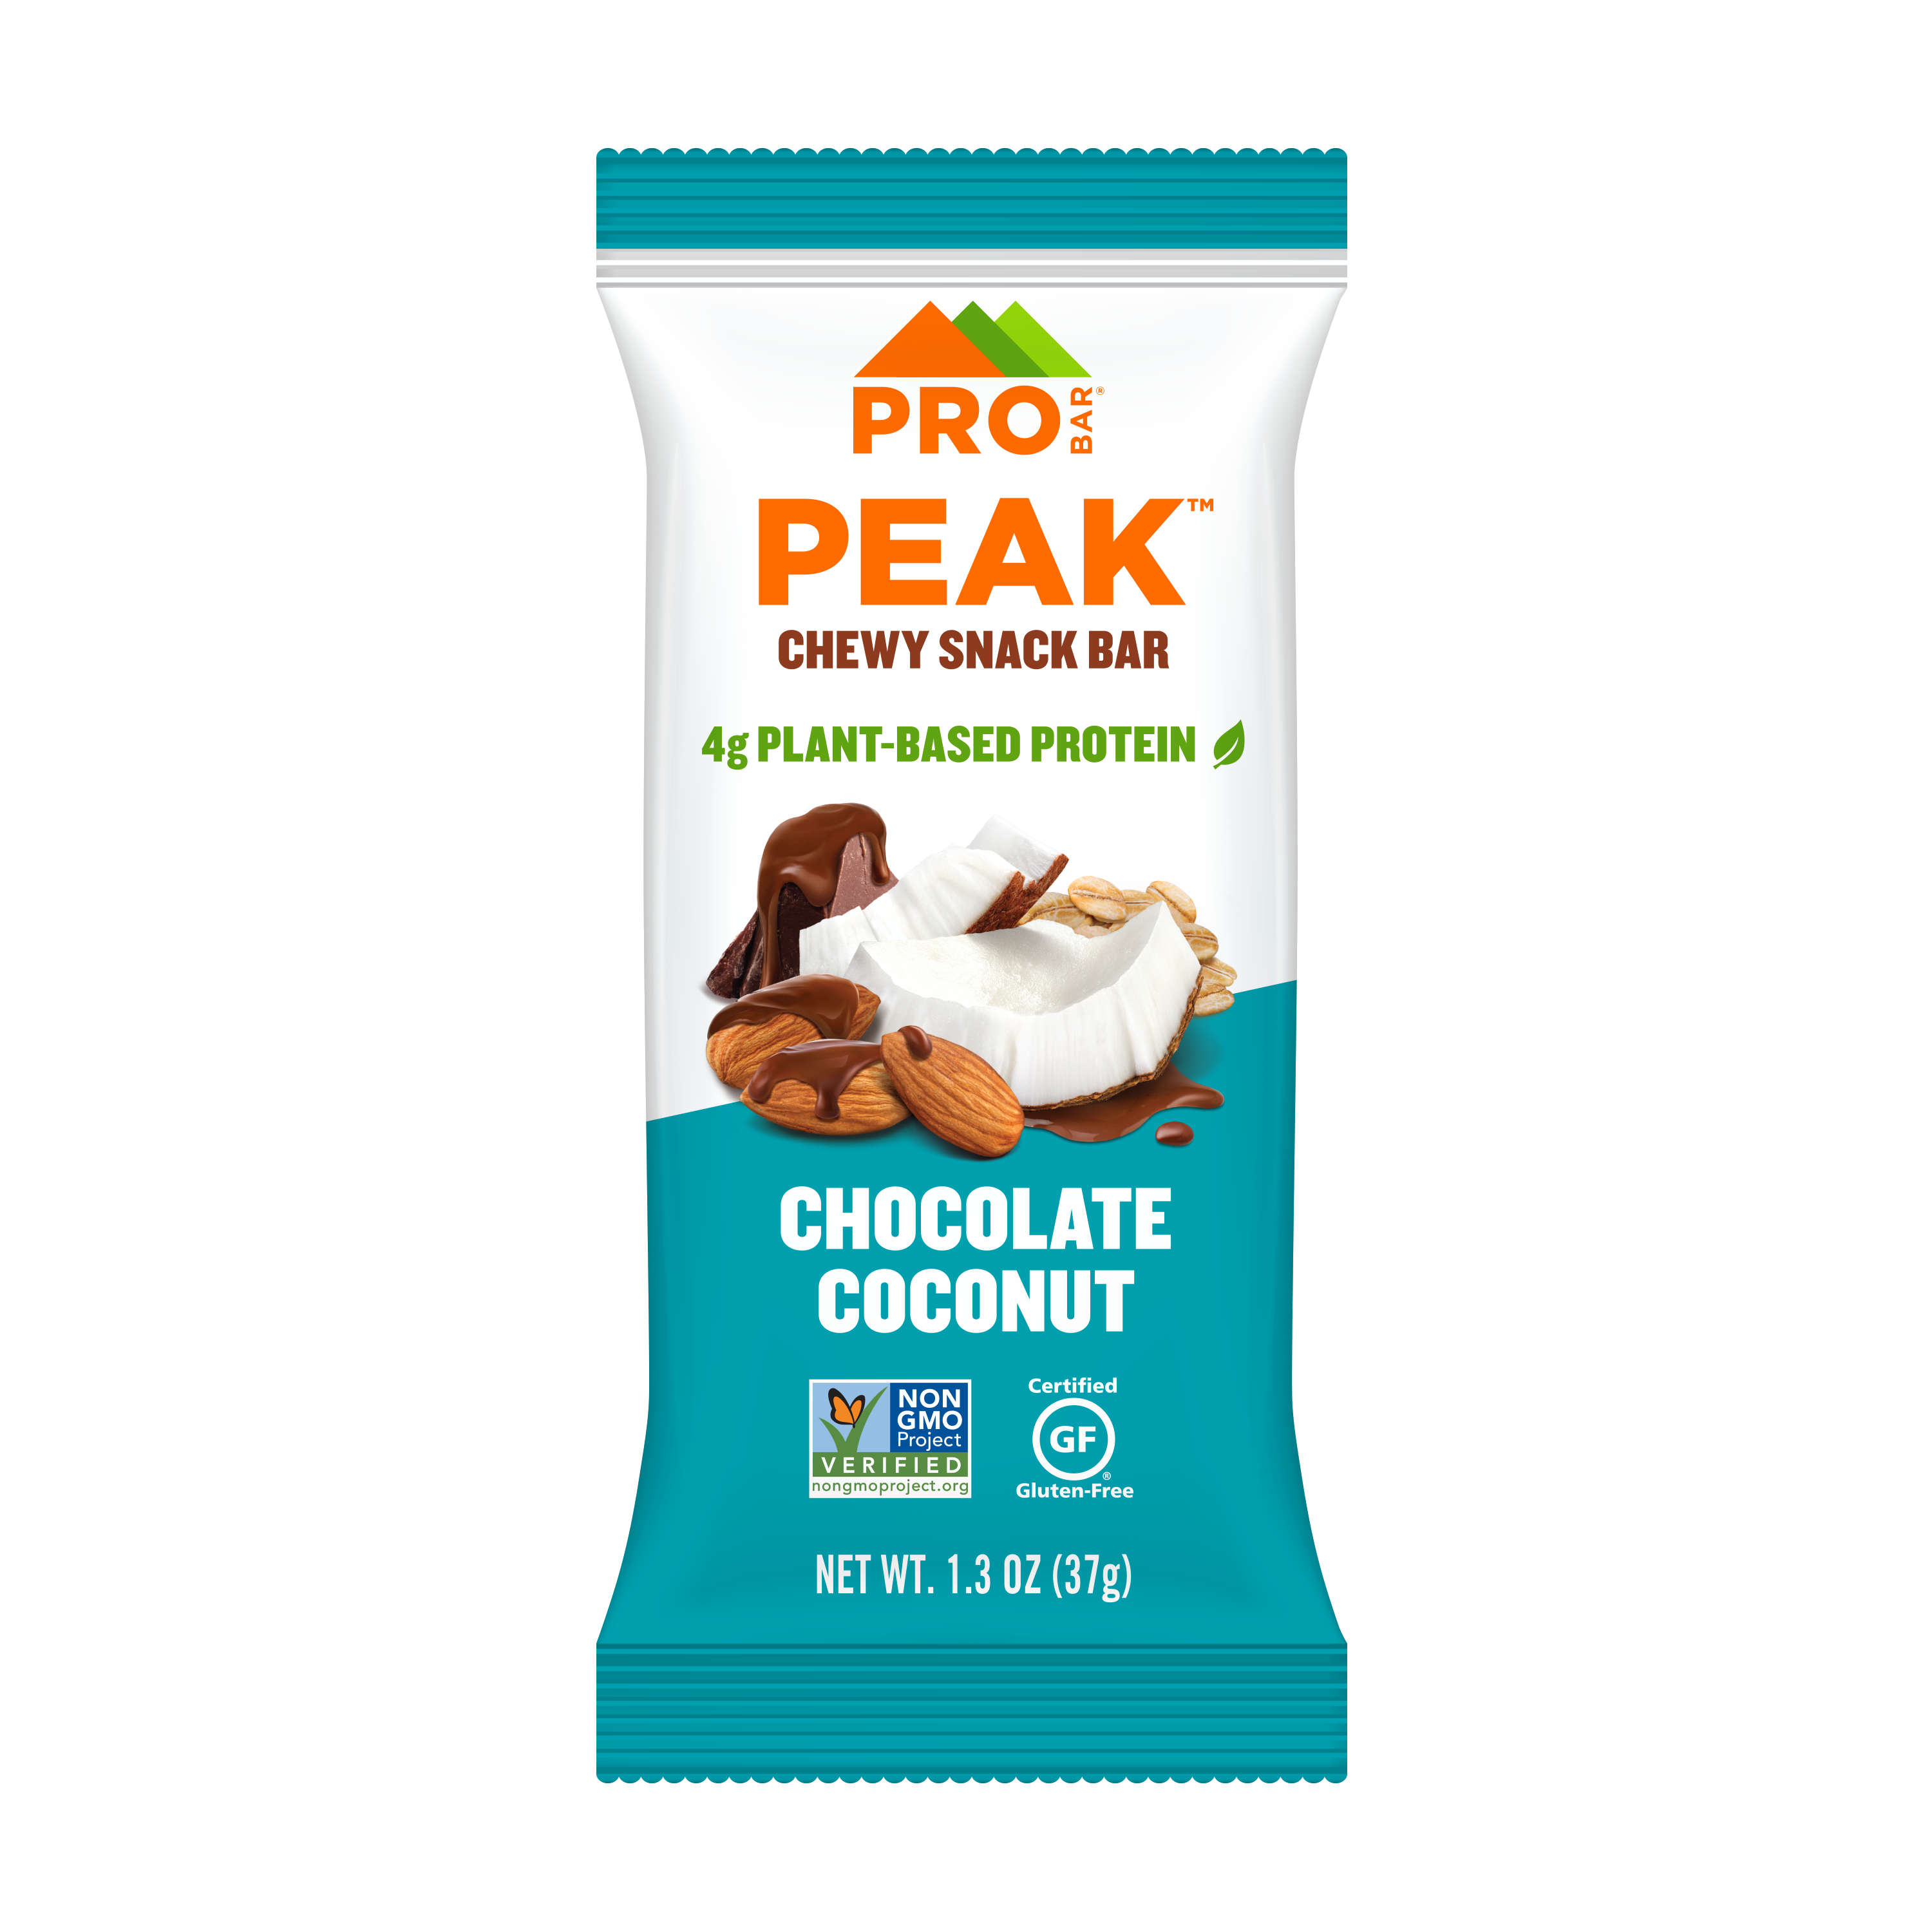 ProBar Chocolate Coconut Peak Chewy Snack Bar 8 innerpacks per case 1.3 oz